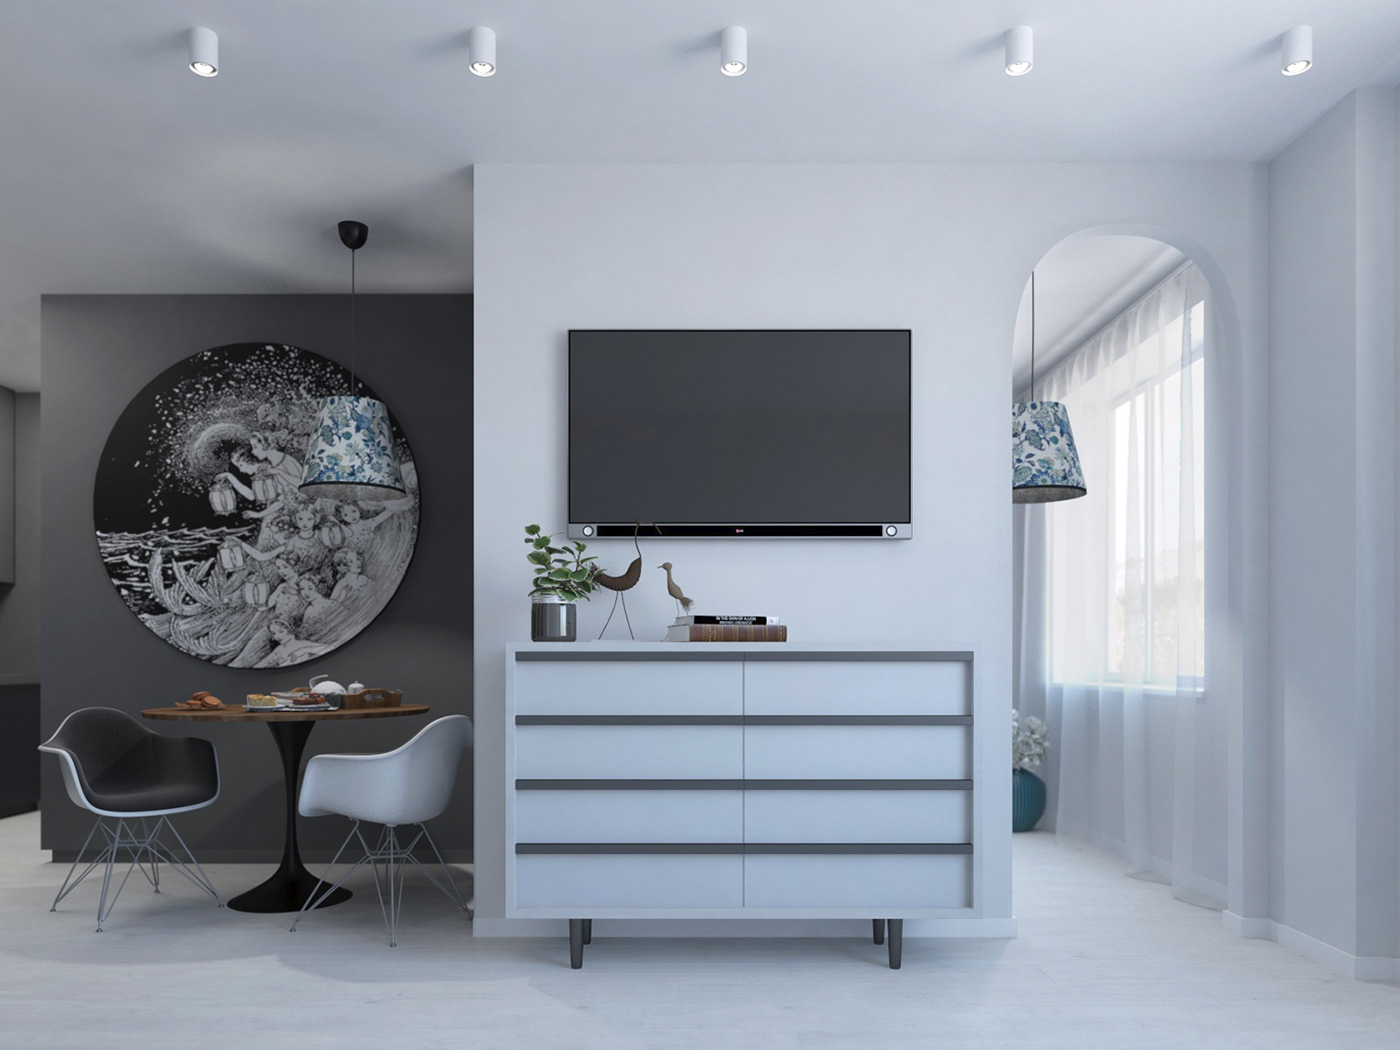 idea design Interior apartment living room kitchen dining bedroom fusion